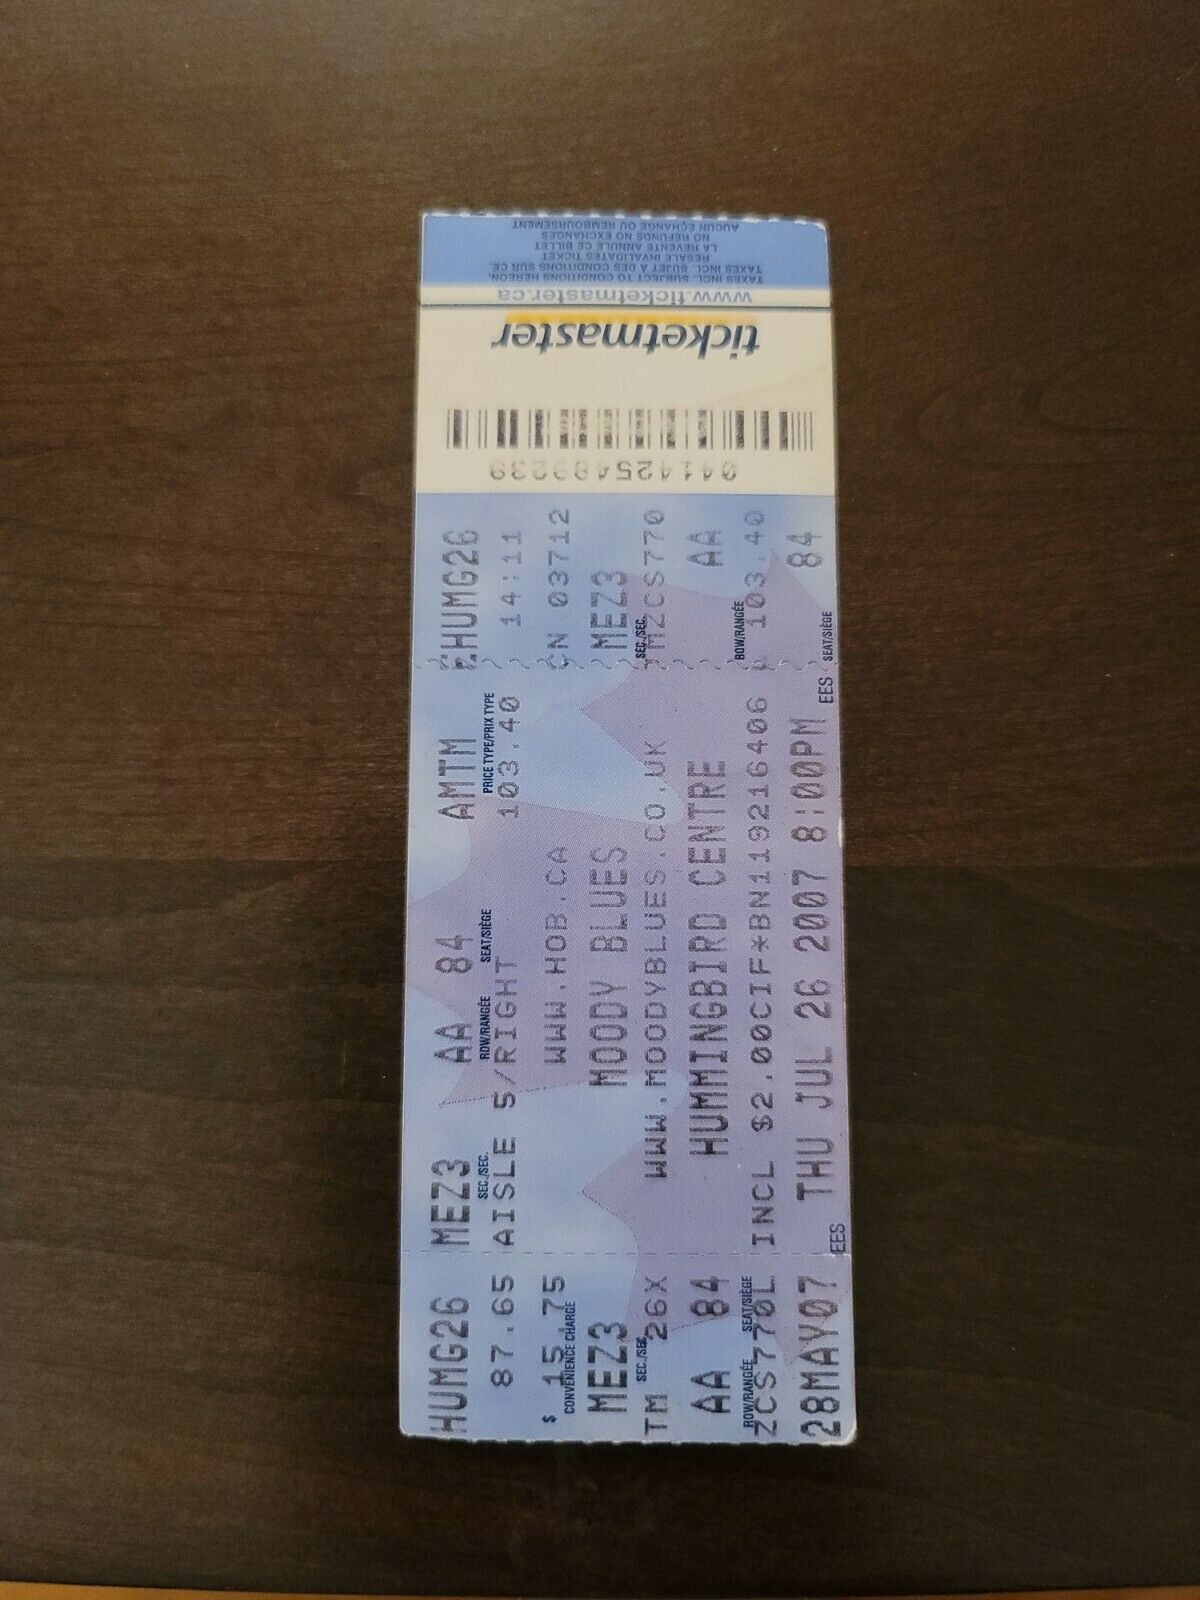 Moody Blues 2007, Toronto Hummingbird Centre Original Concert Ticket Stub